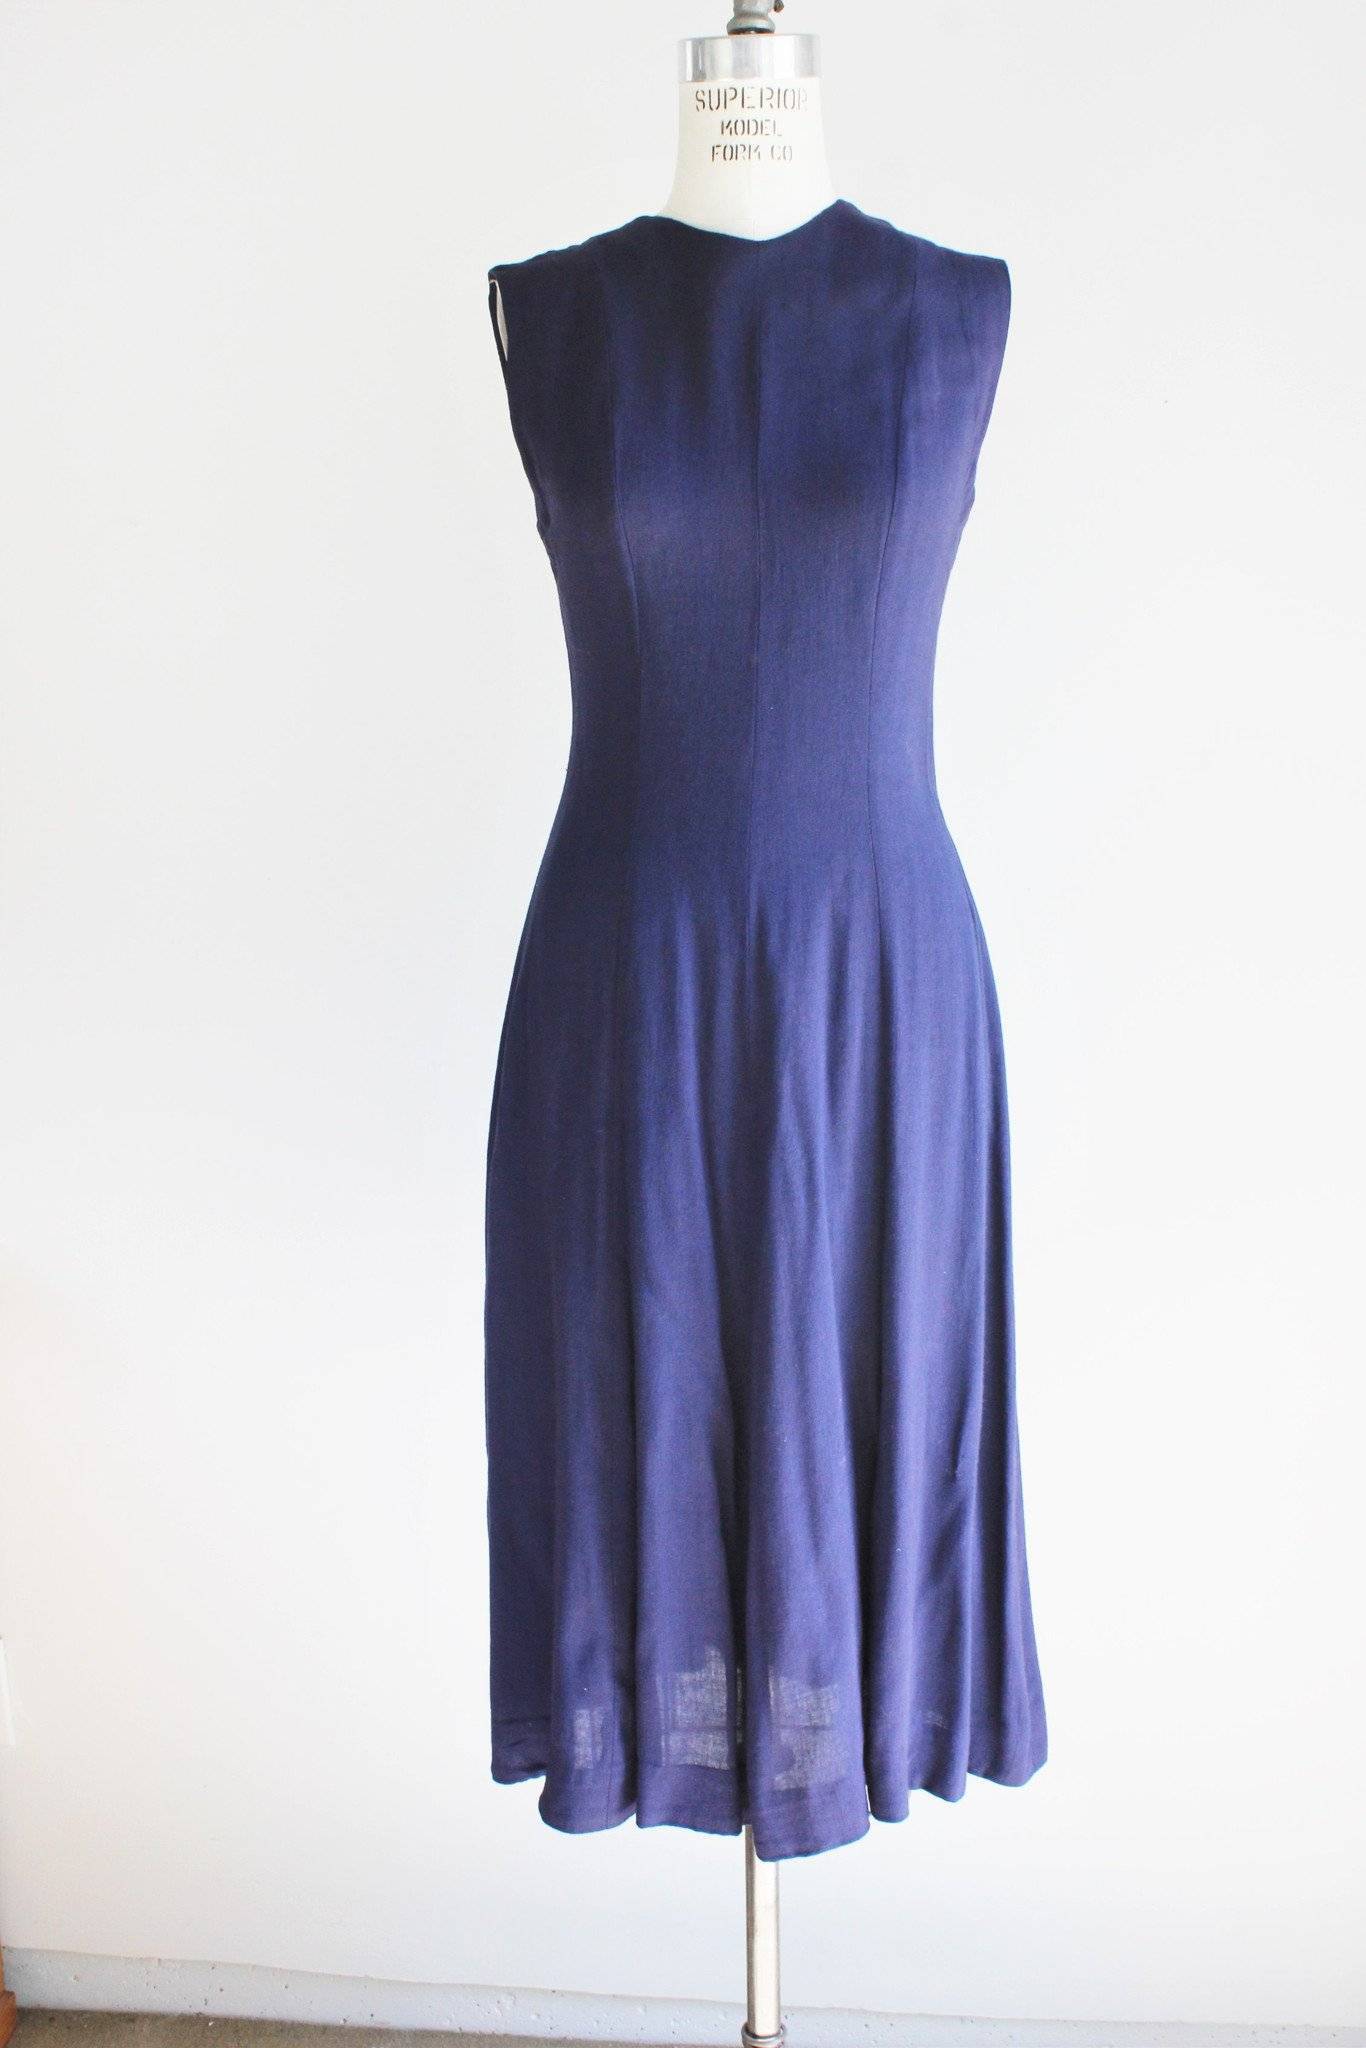 Vintage 1950s Navy Blue Sleeveless Summer Dress-Toadstool Farm Vintage-1950s,Dress,Navy Blue,Sleeveless,Spring,Summer,Vintage,Vintage Clothing